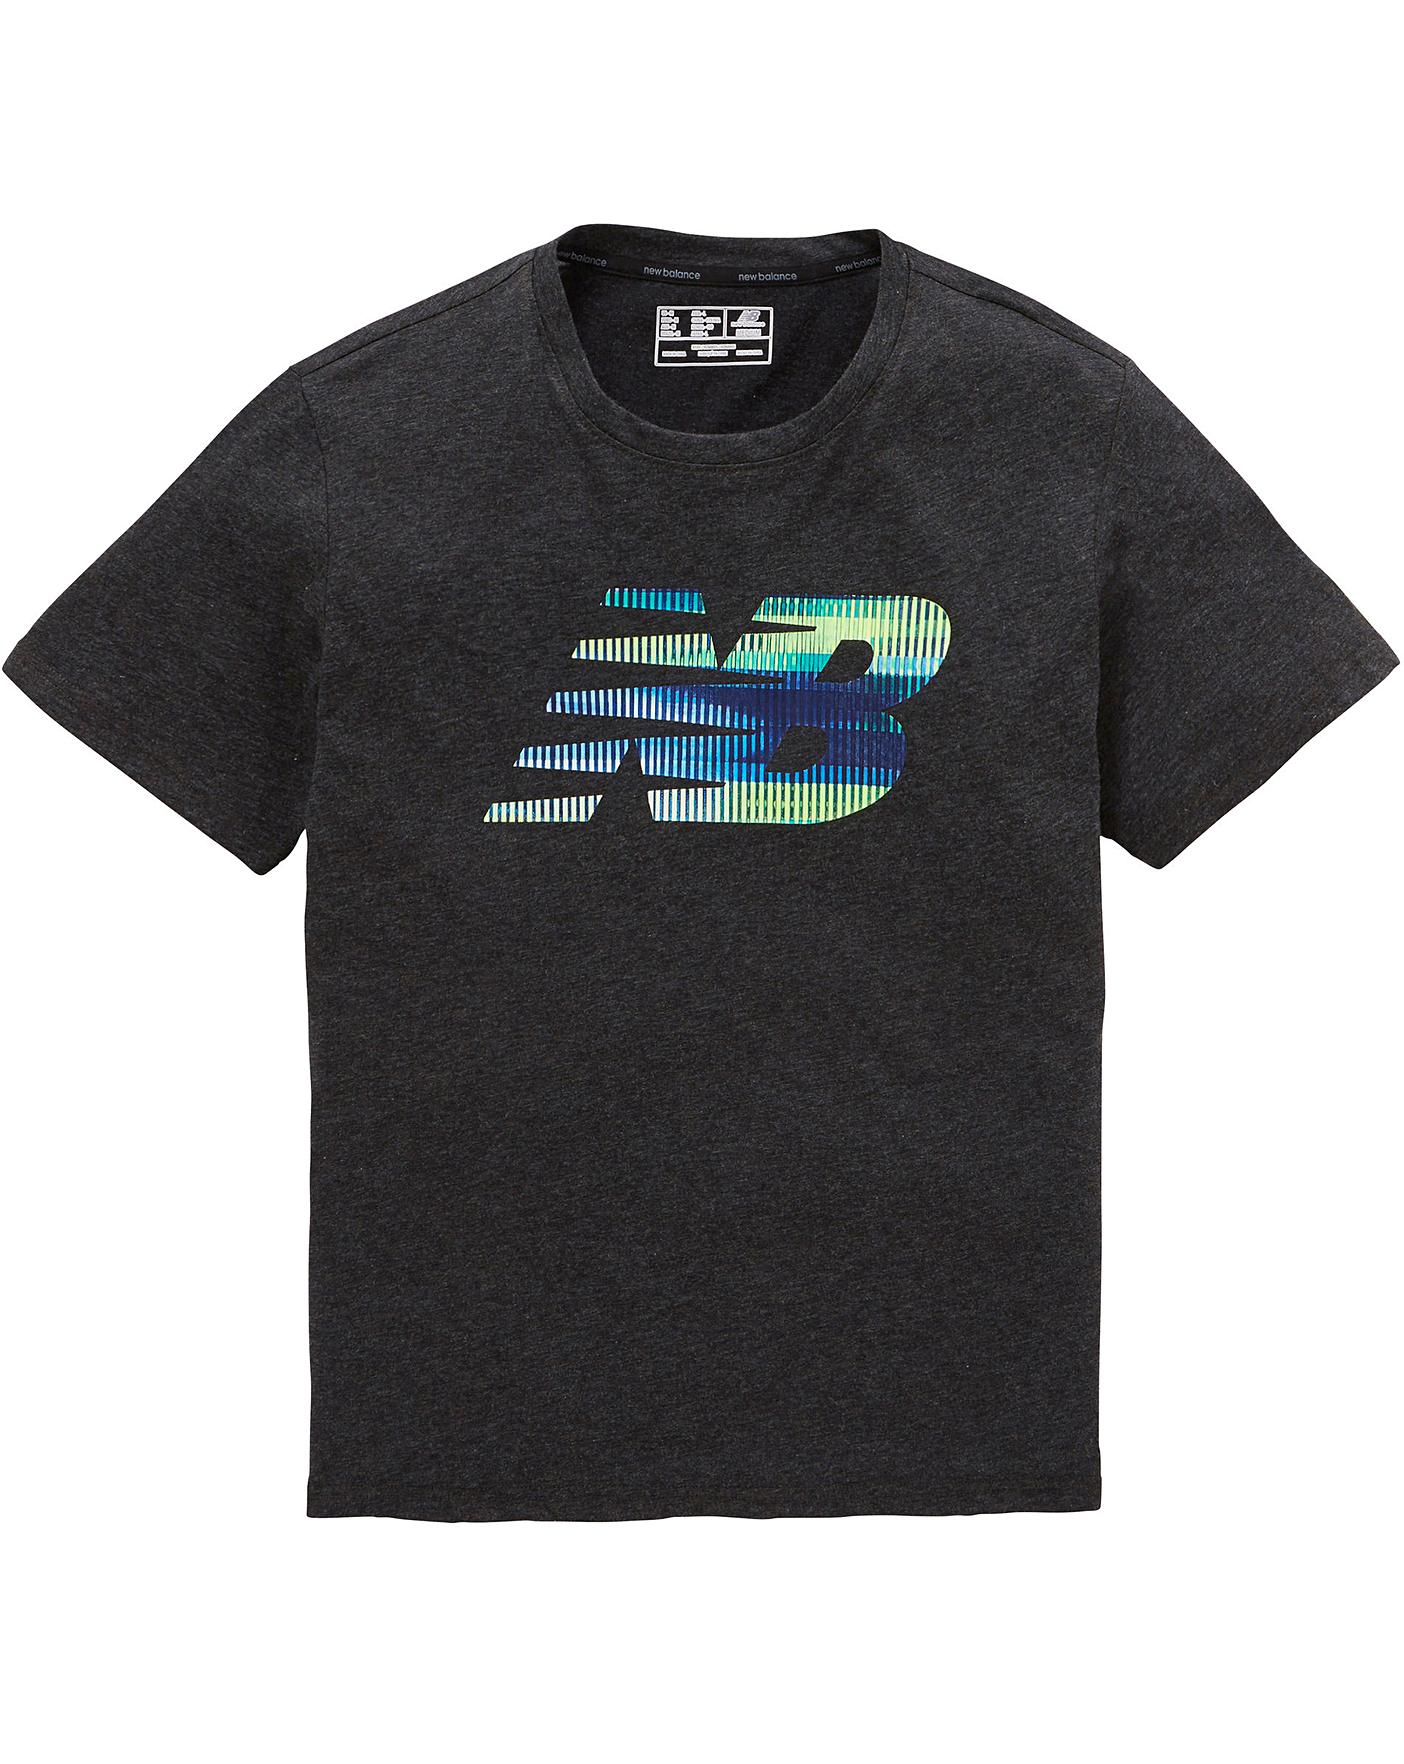 New Balance Graphic Tech T-Shirt | Jacamo